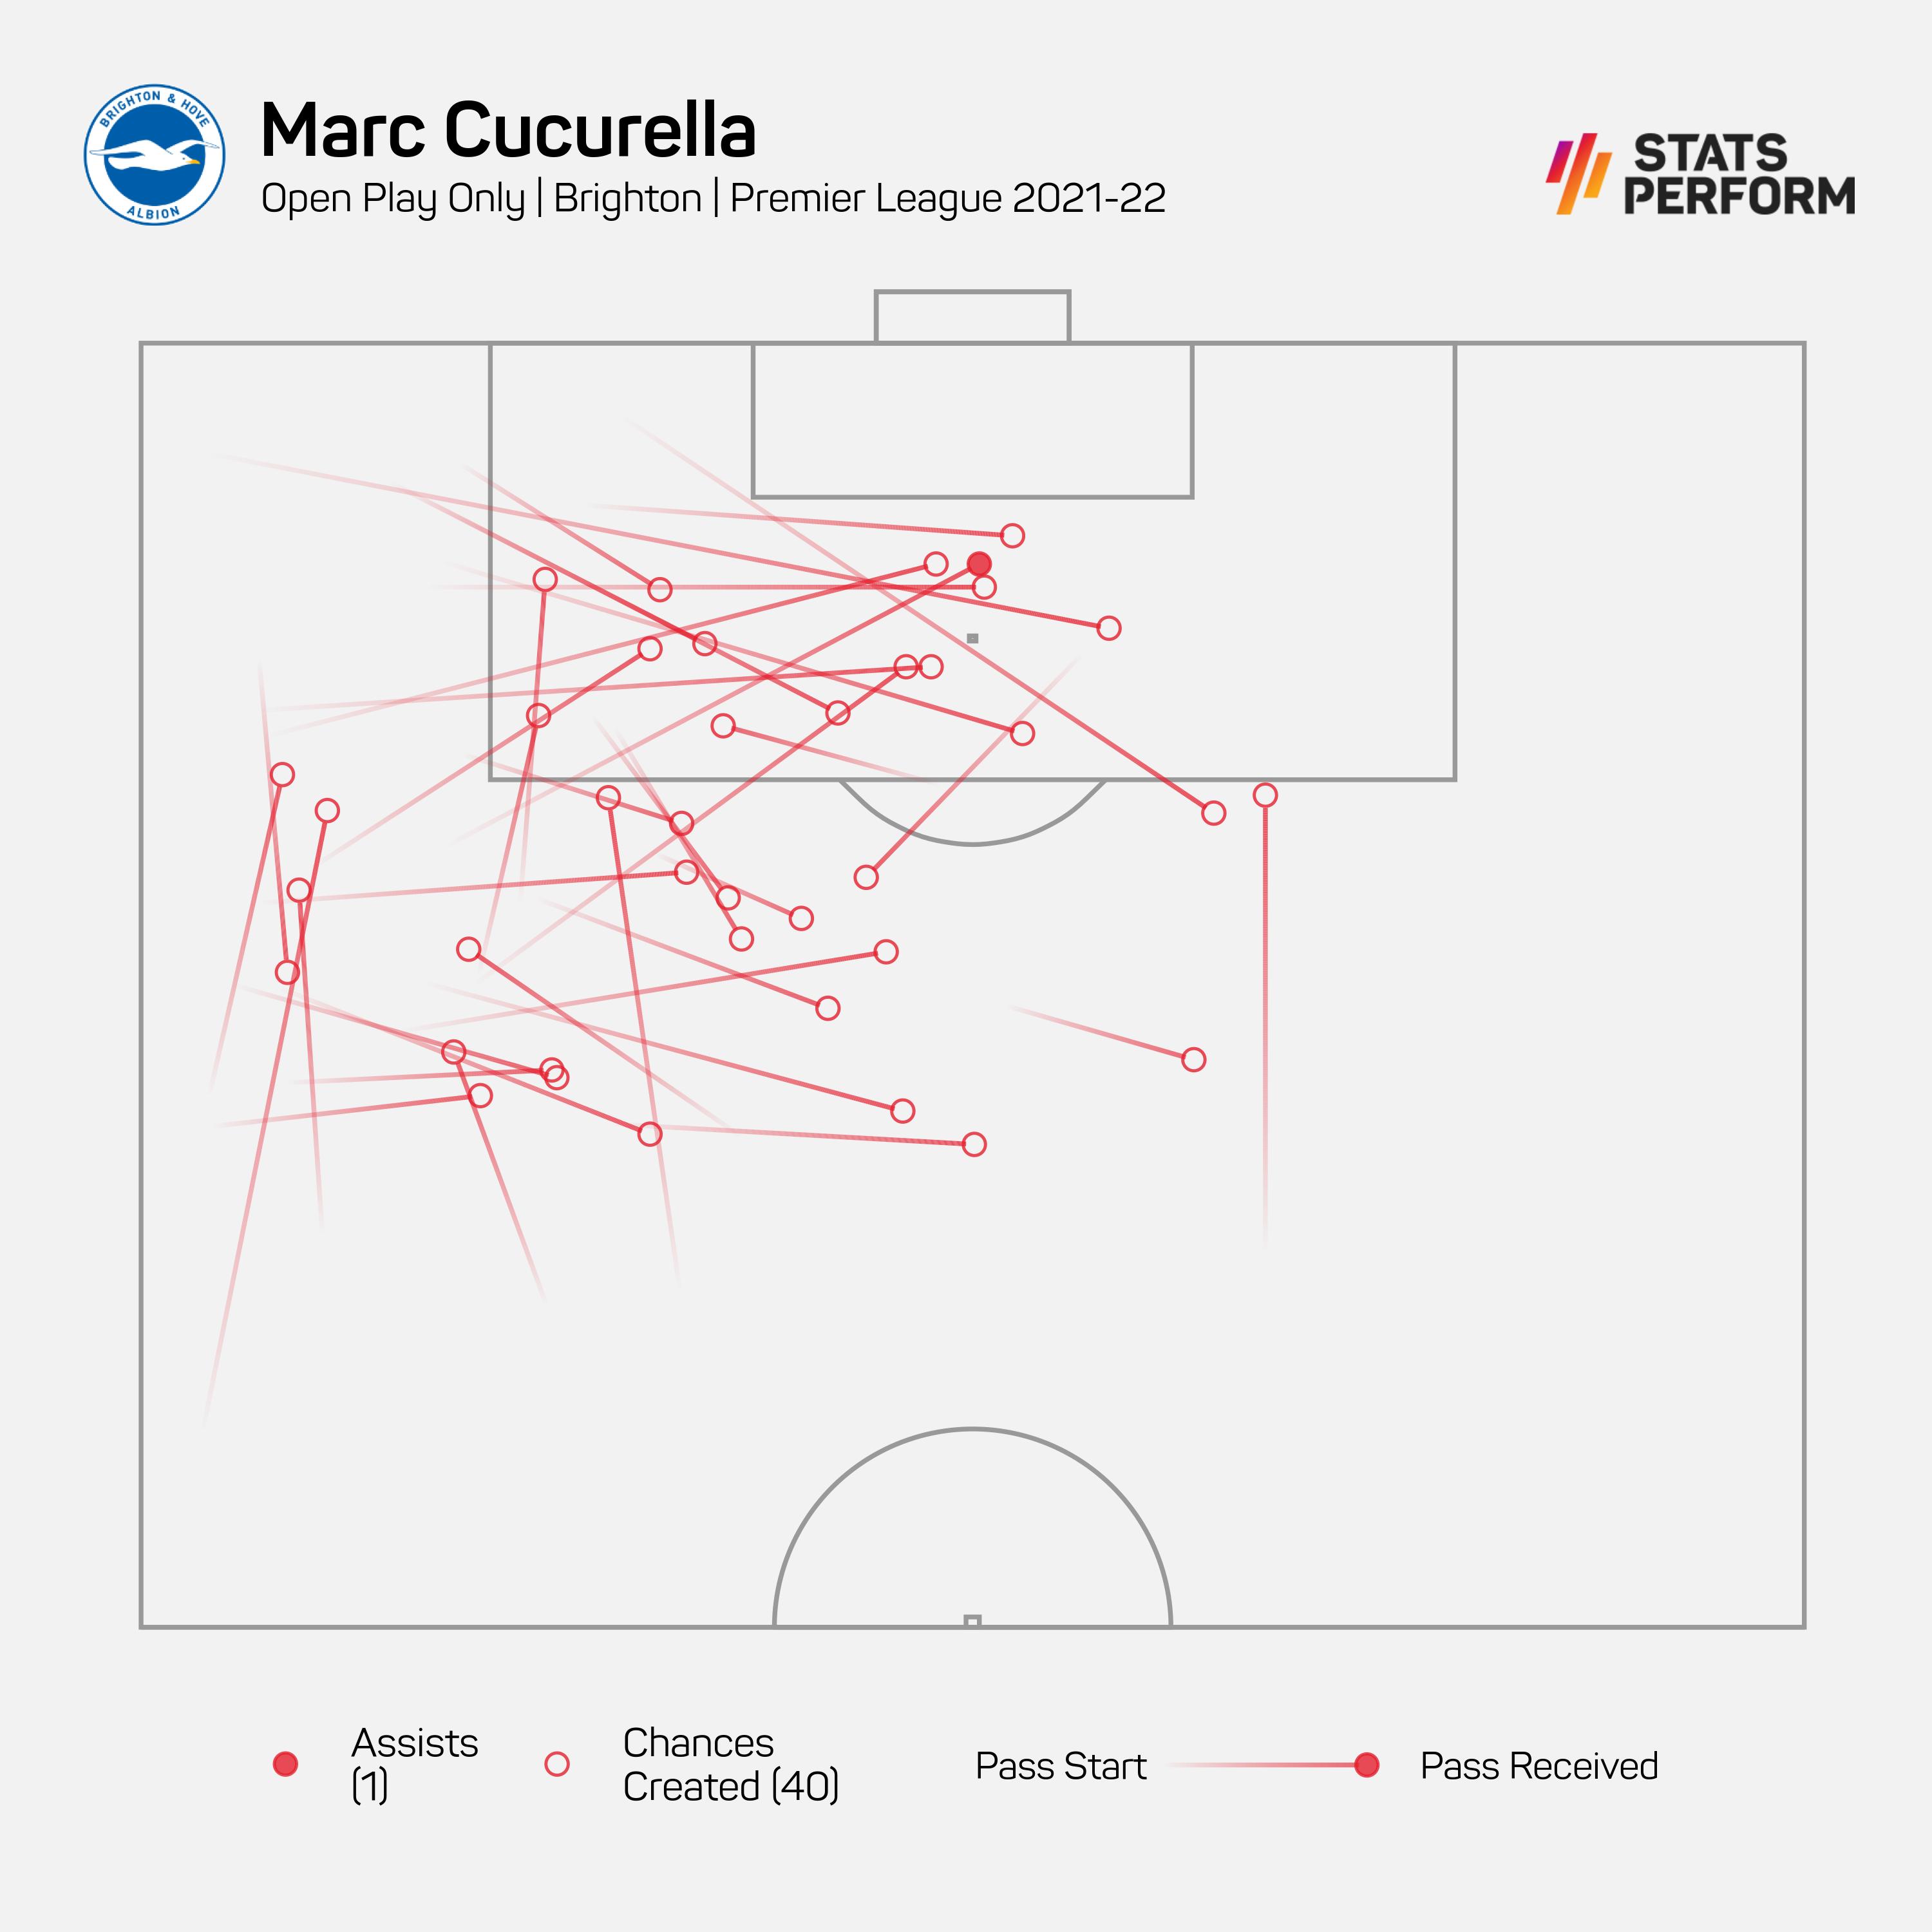 Open-play chances created by Marc Cucurella last season